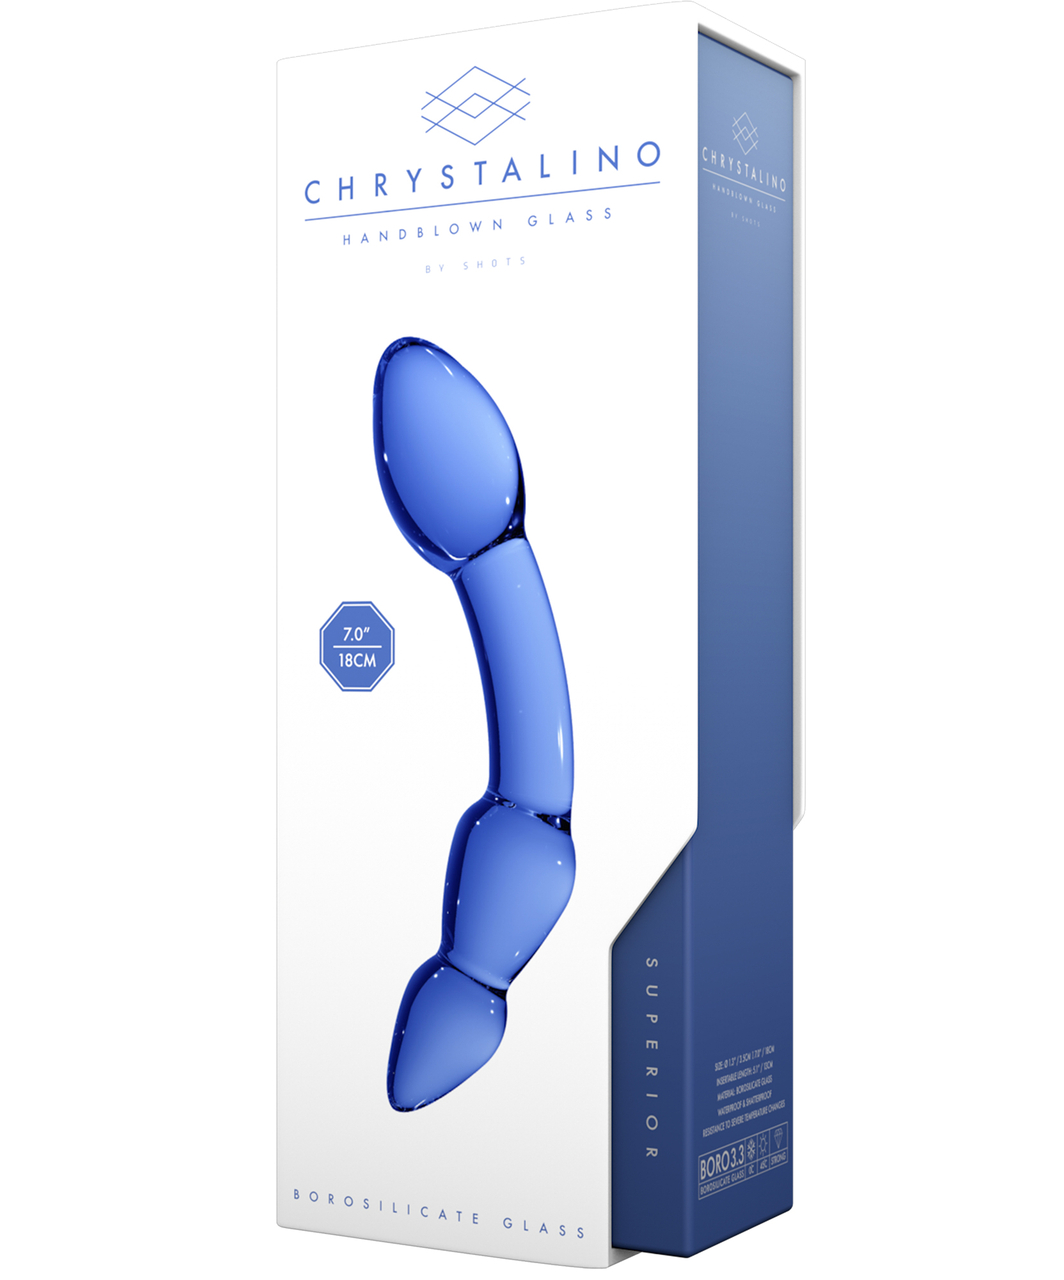 Chrystalino Superior стеклянный дилдо